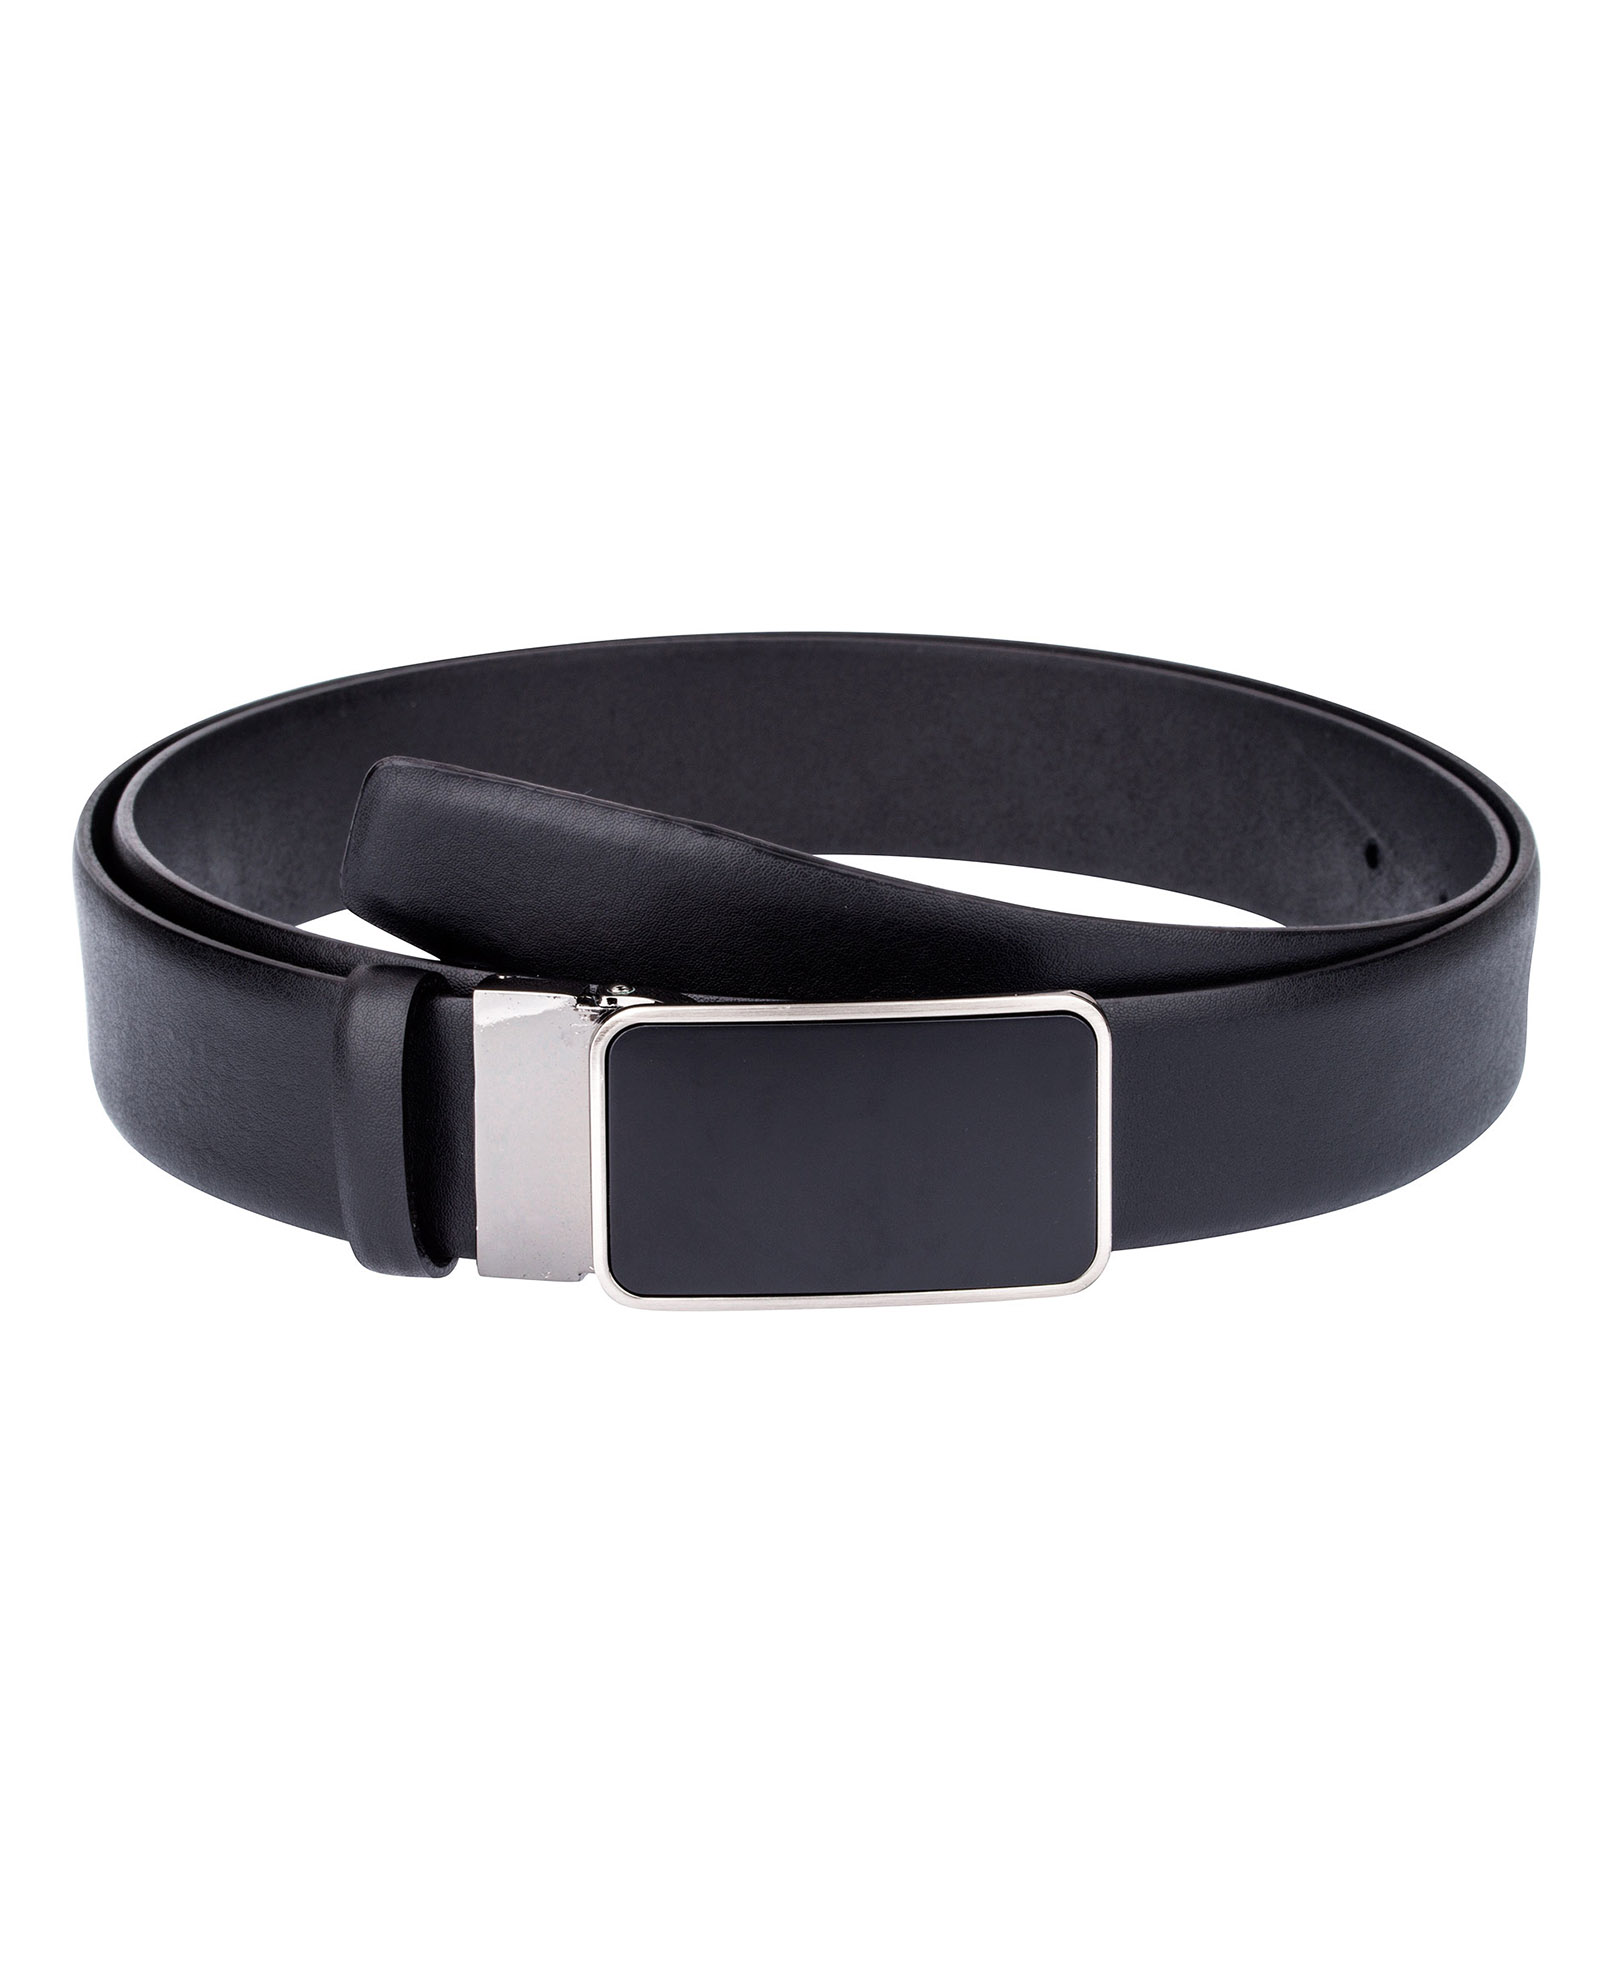 Buy Men's Black Casual Leather Belt - Capo Pelle - Free Shipping